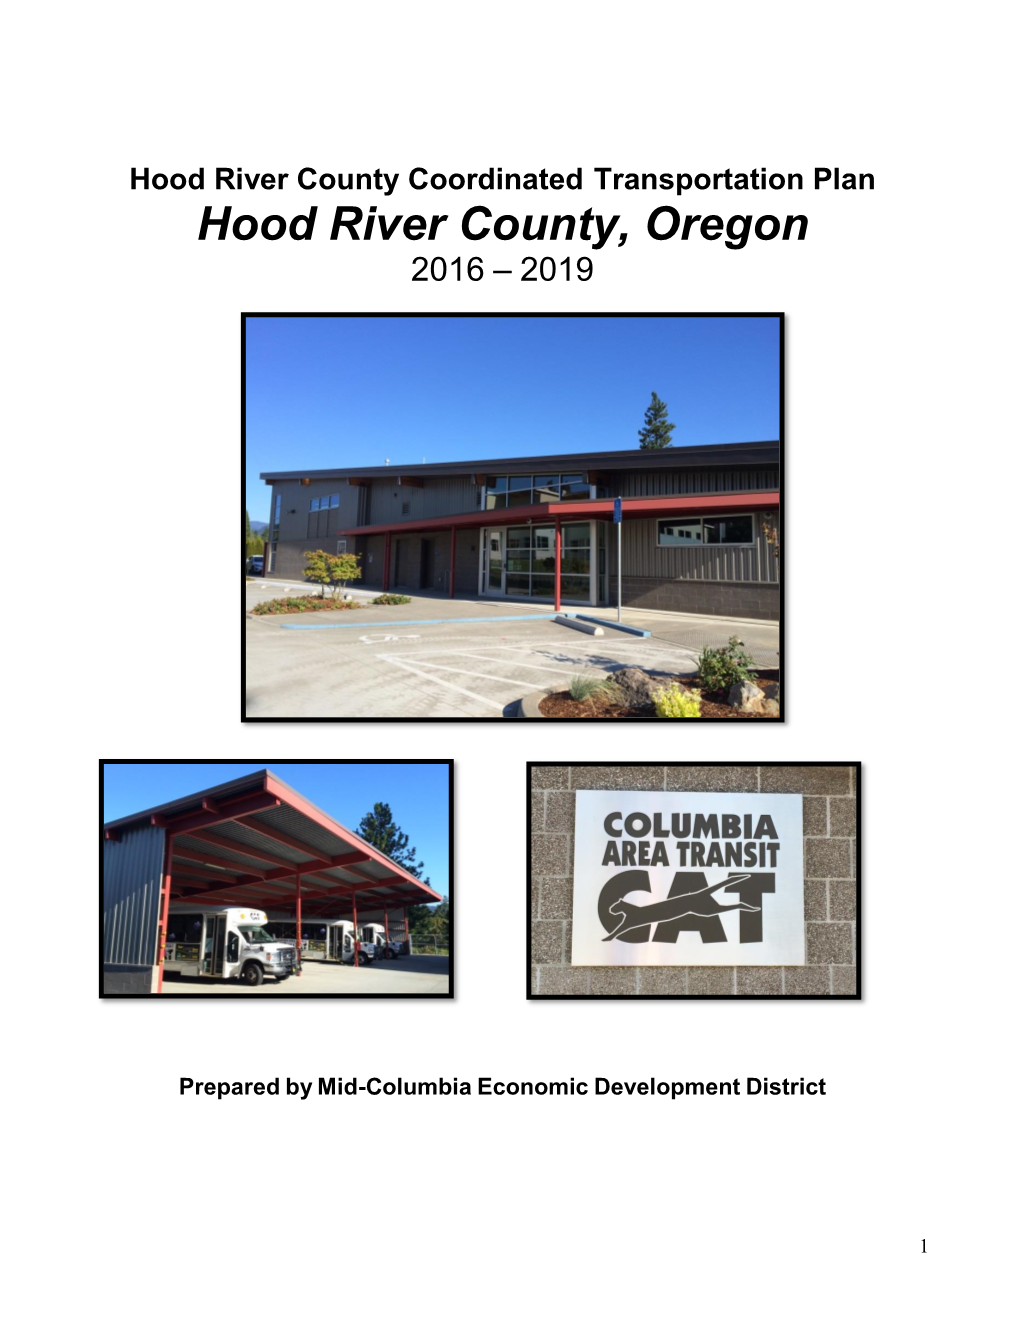 Hood River County Coordinated Transportation Plan 2016-2019